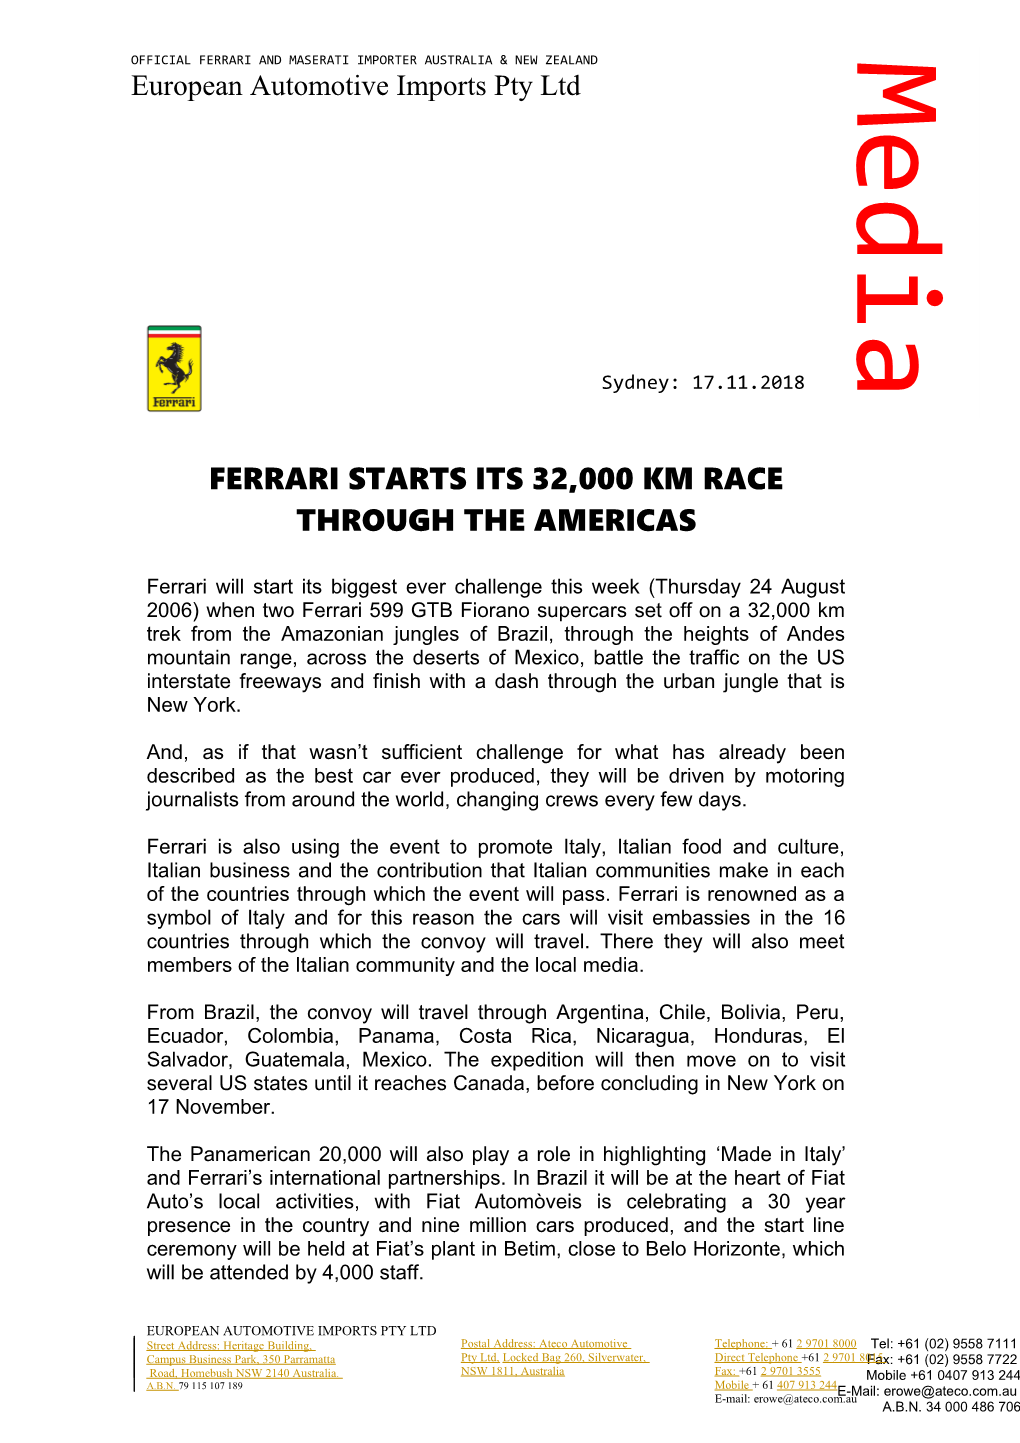 Ferrari Starts Its 32,000 Km Race Through the Americas